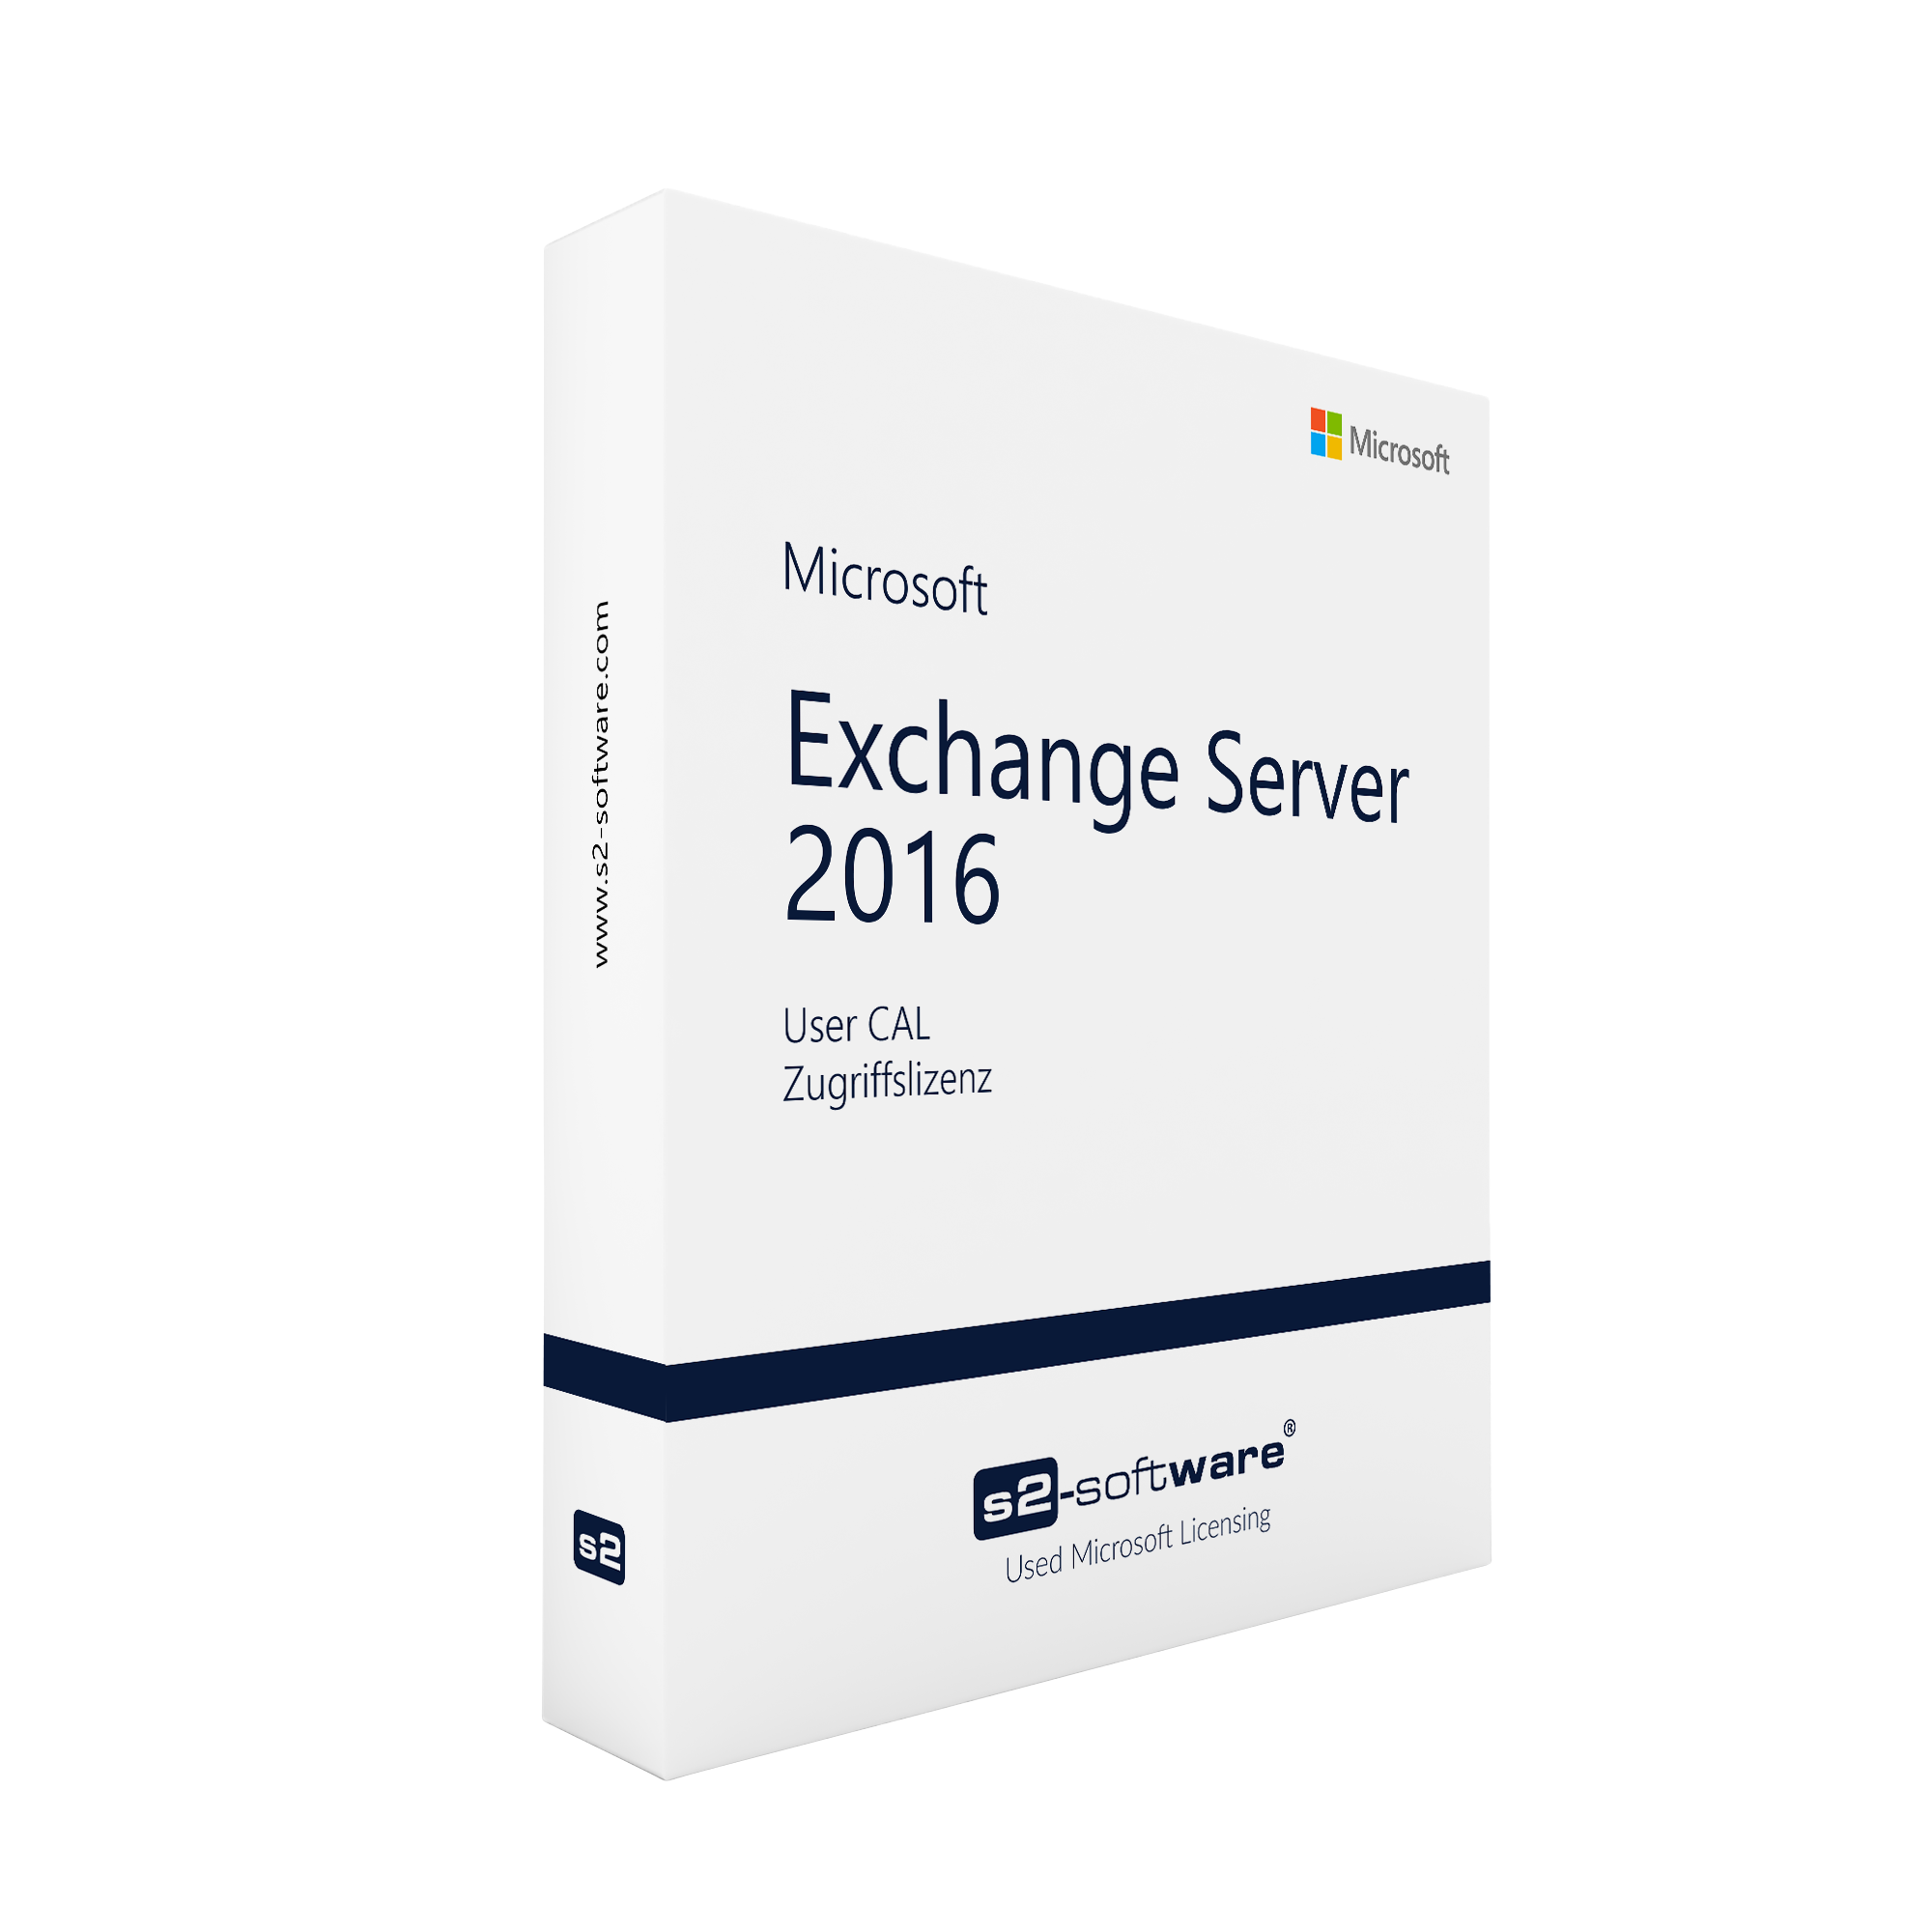 Exchange Server 2016 User CAL